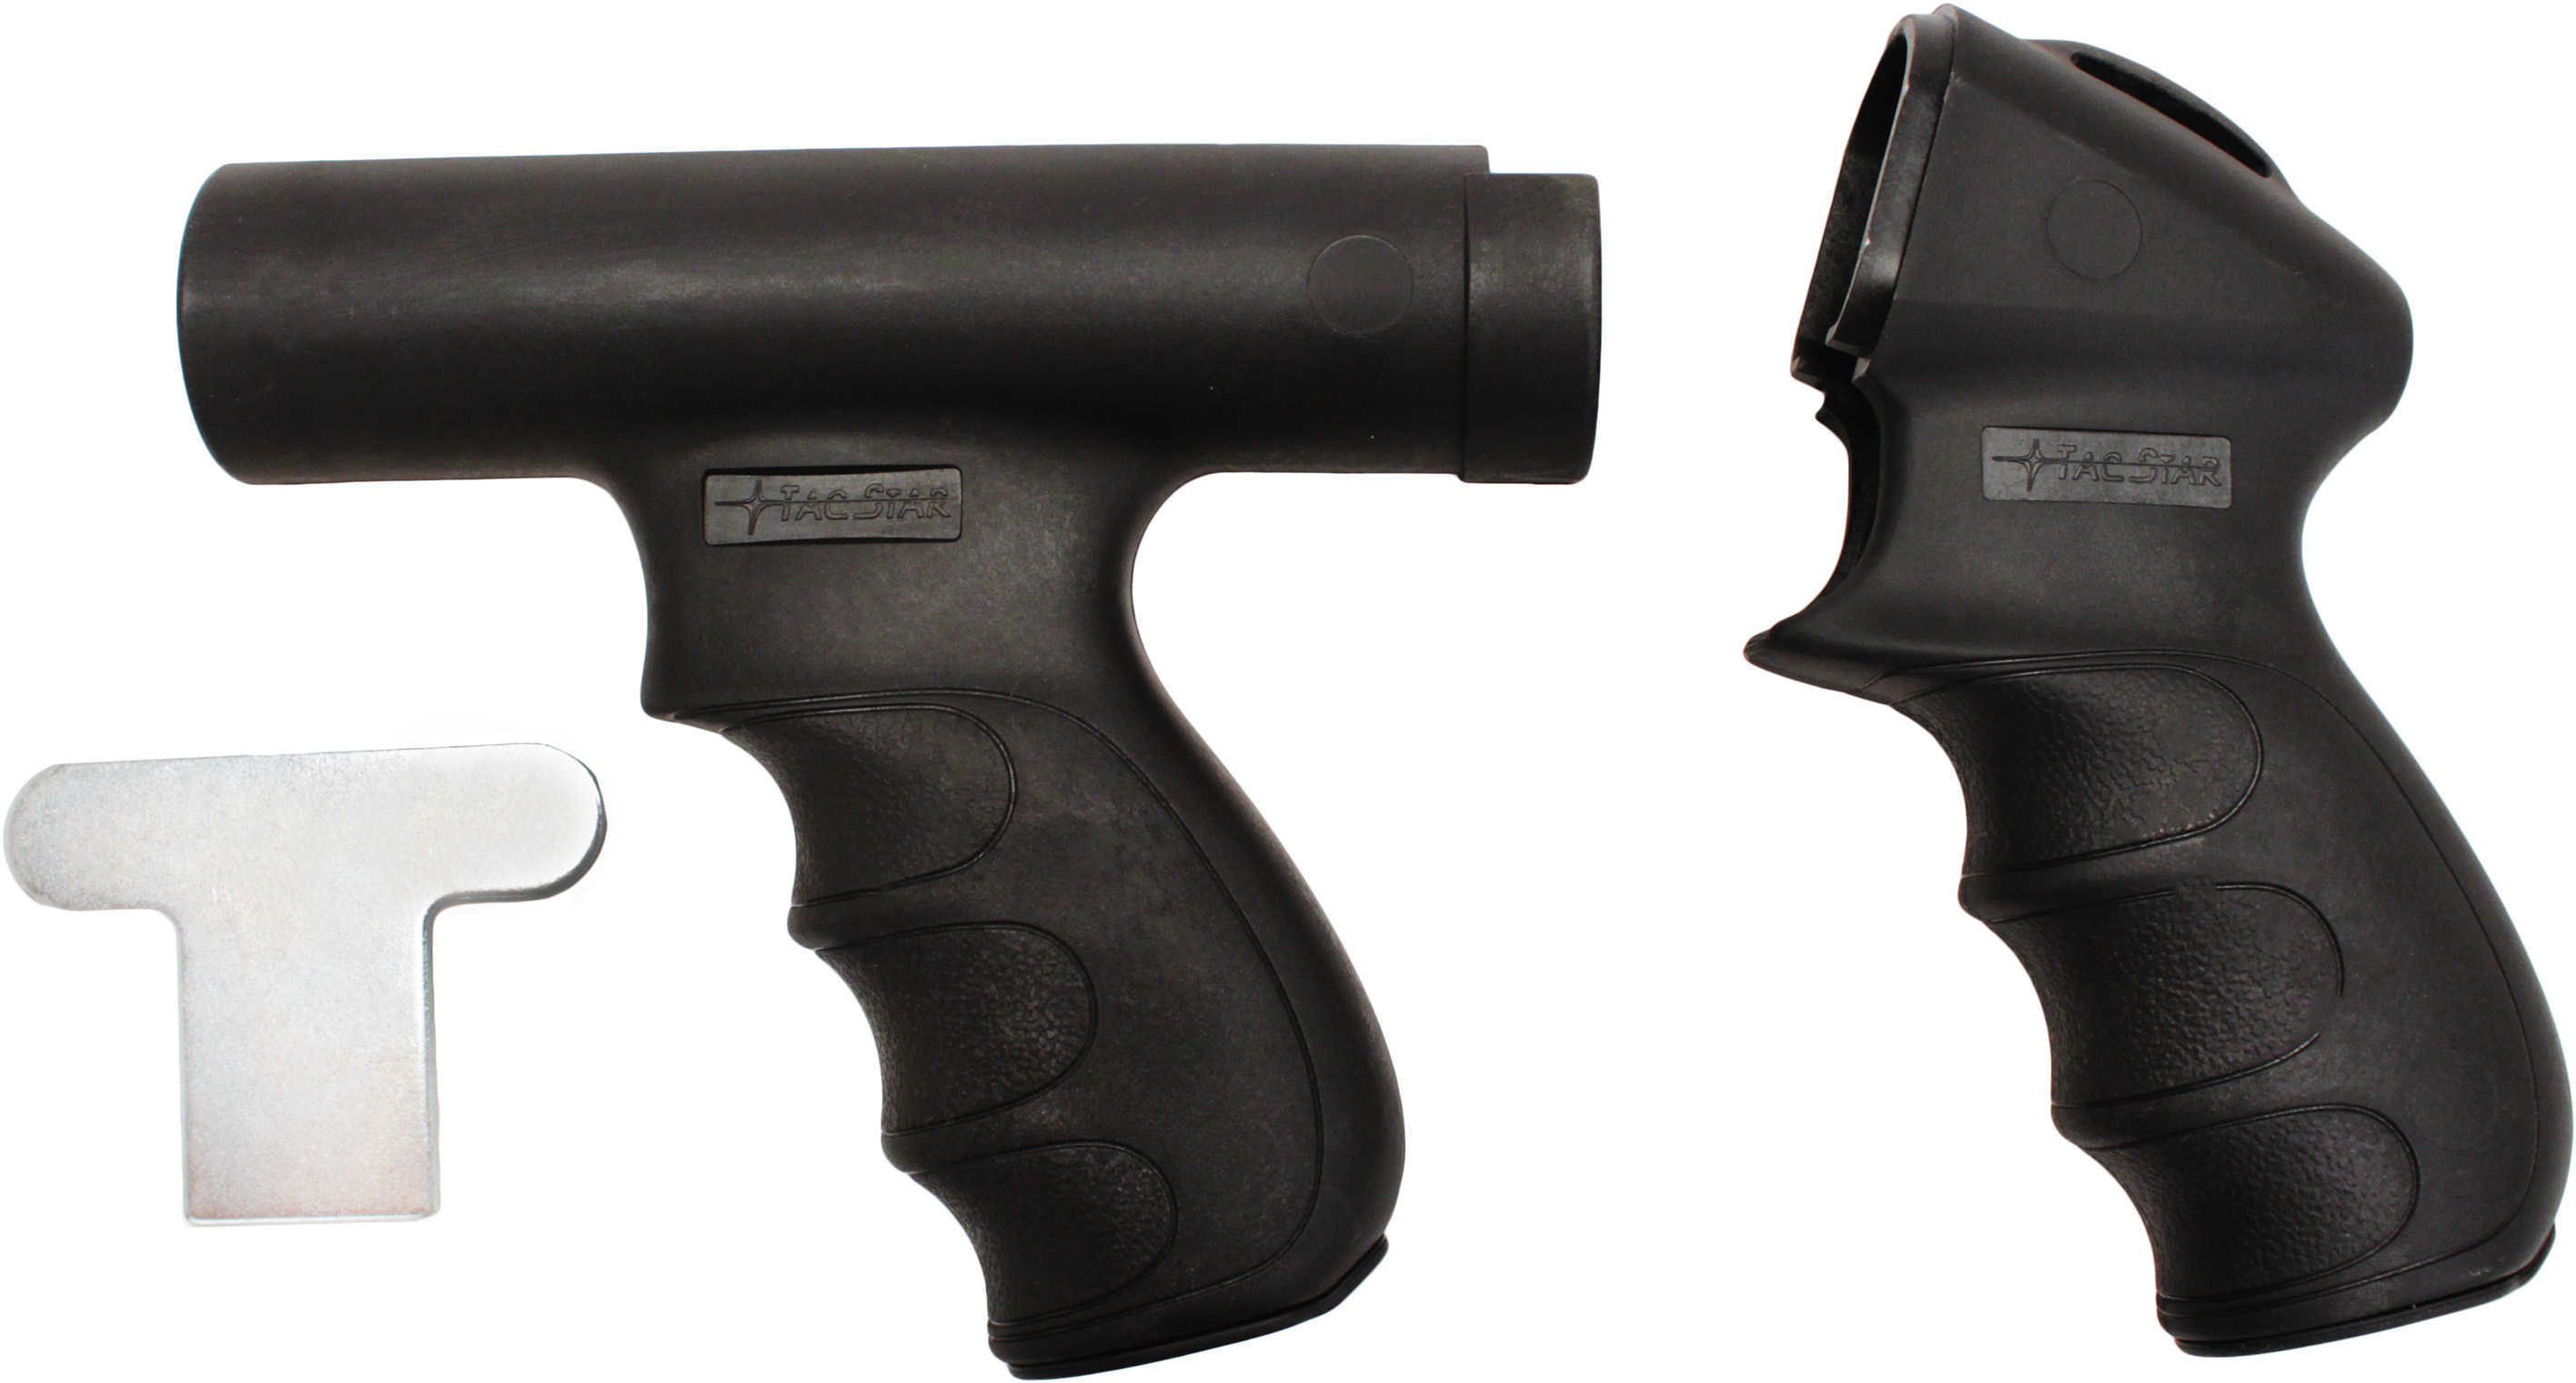 TacStar Industries Front and Rear Shotgun Grip Set Fits Rem 870 Black Finish 1081149